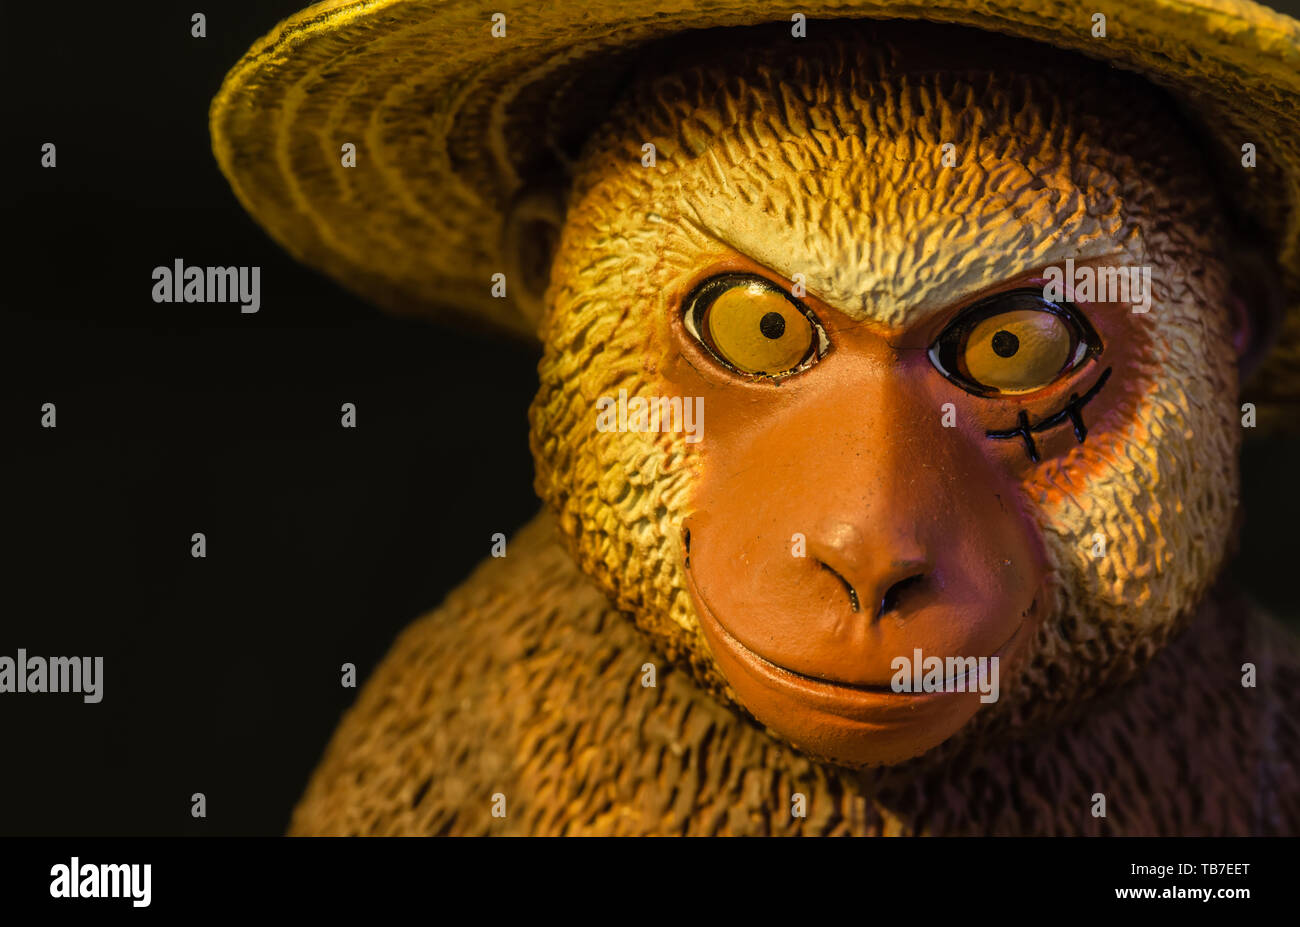 monkey figure toy head macro view Stock Photo